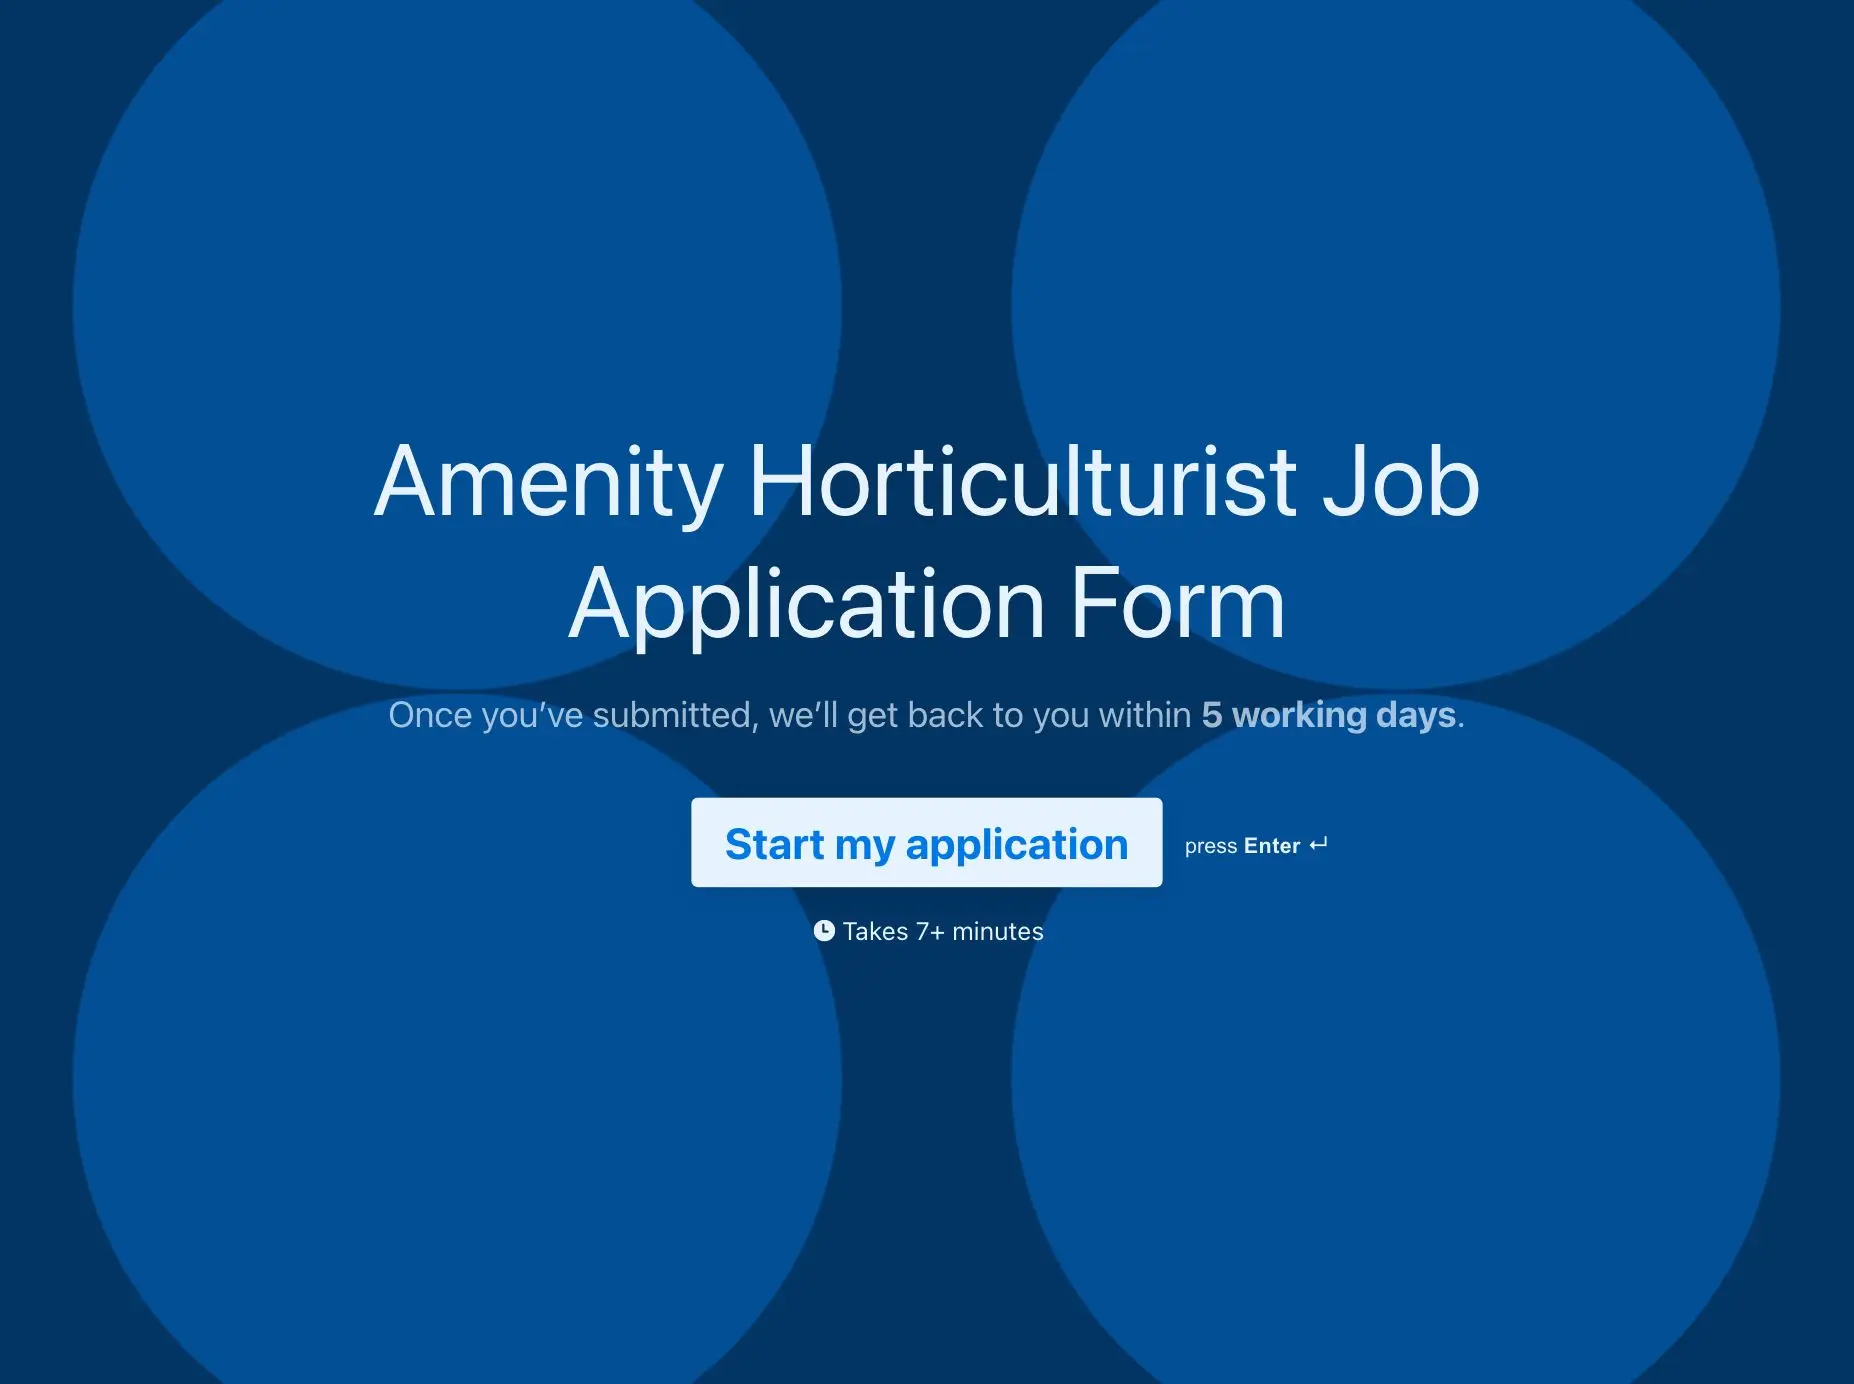 Amenity Horticulturist Job Application Form Template Hero